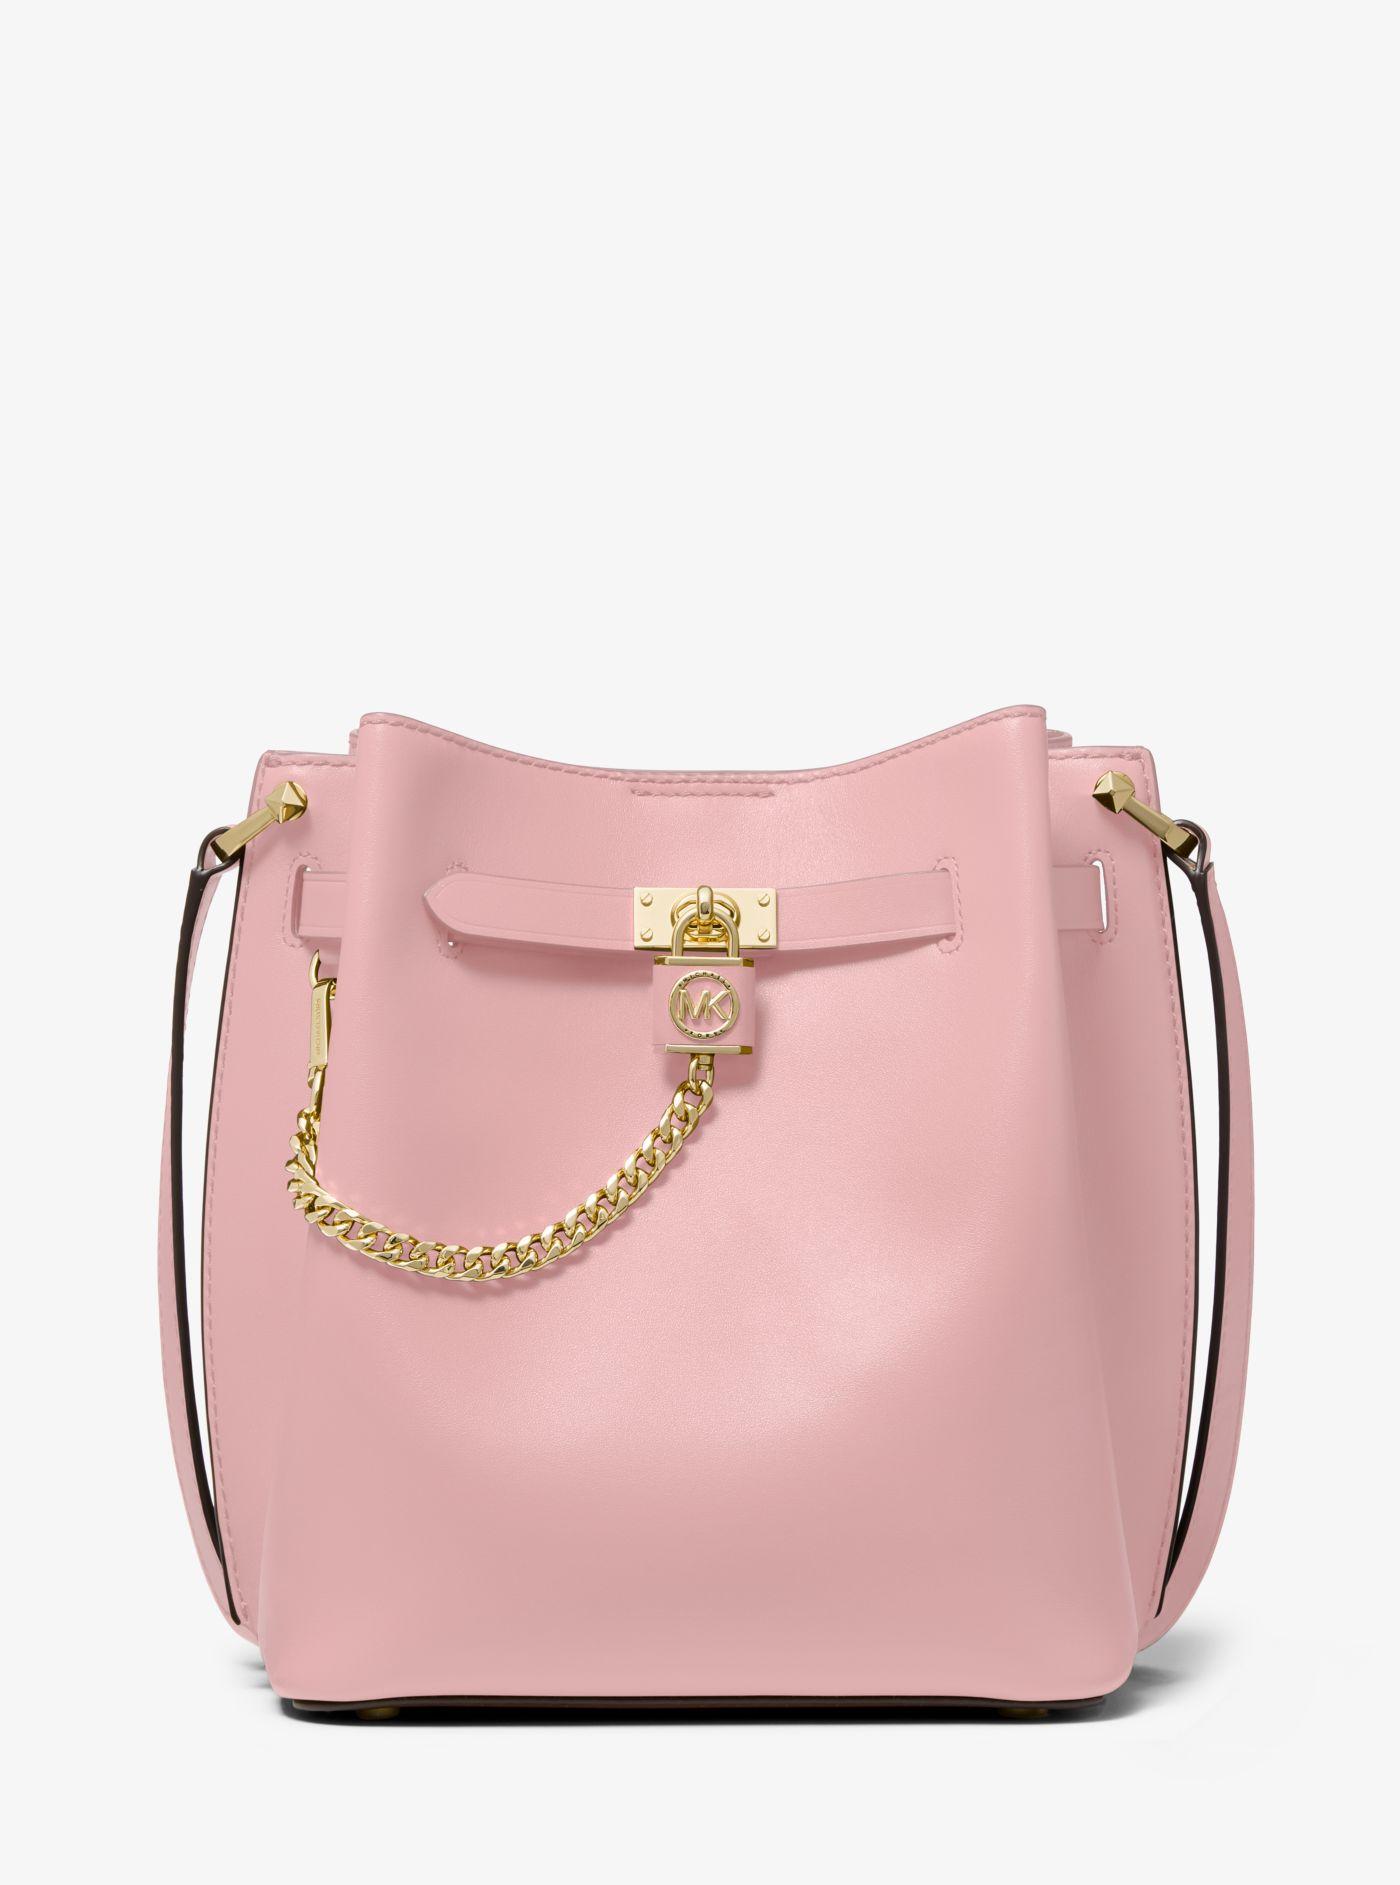 Michael Kors Hamilton Legacy Medium Leather Messenger Bag in Pink | Lyst